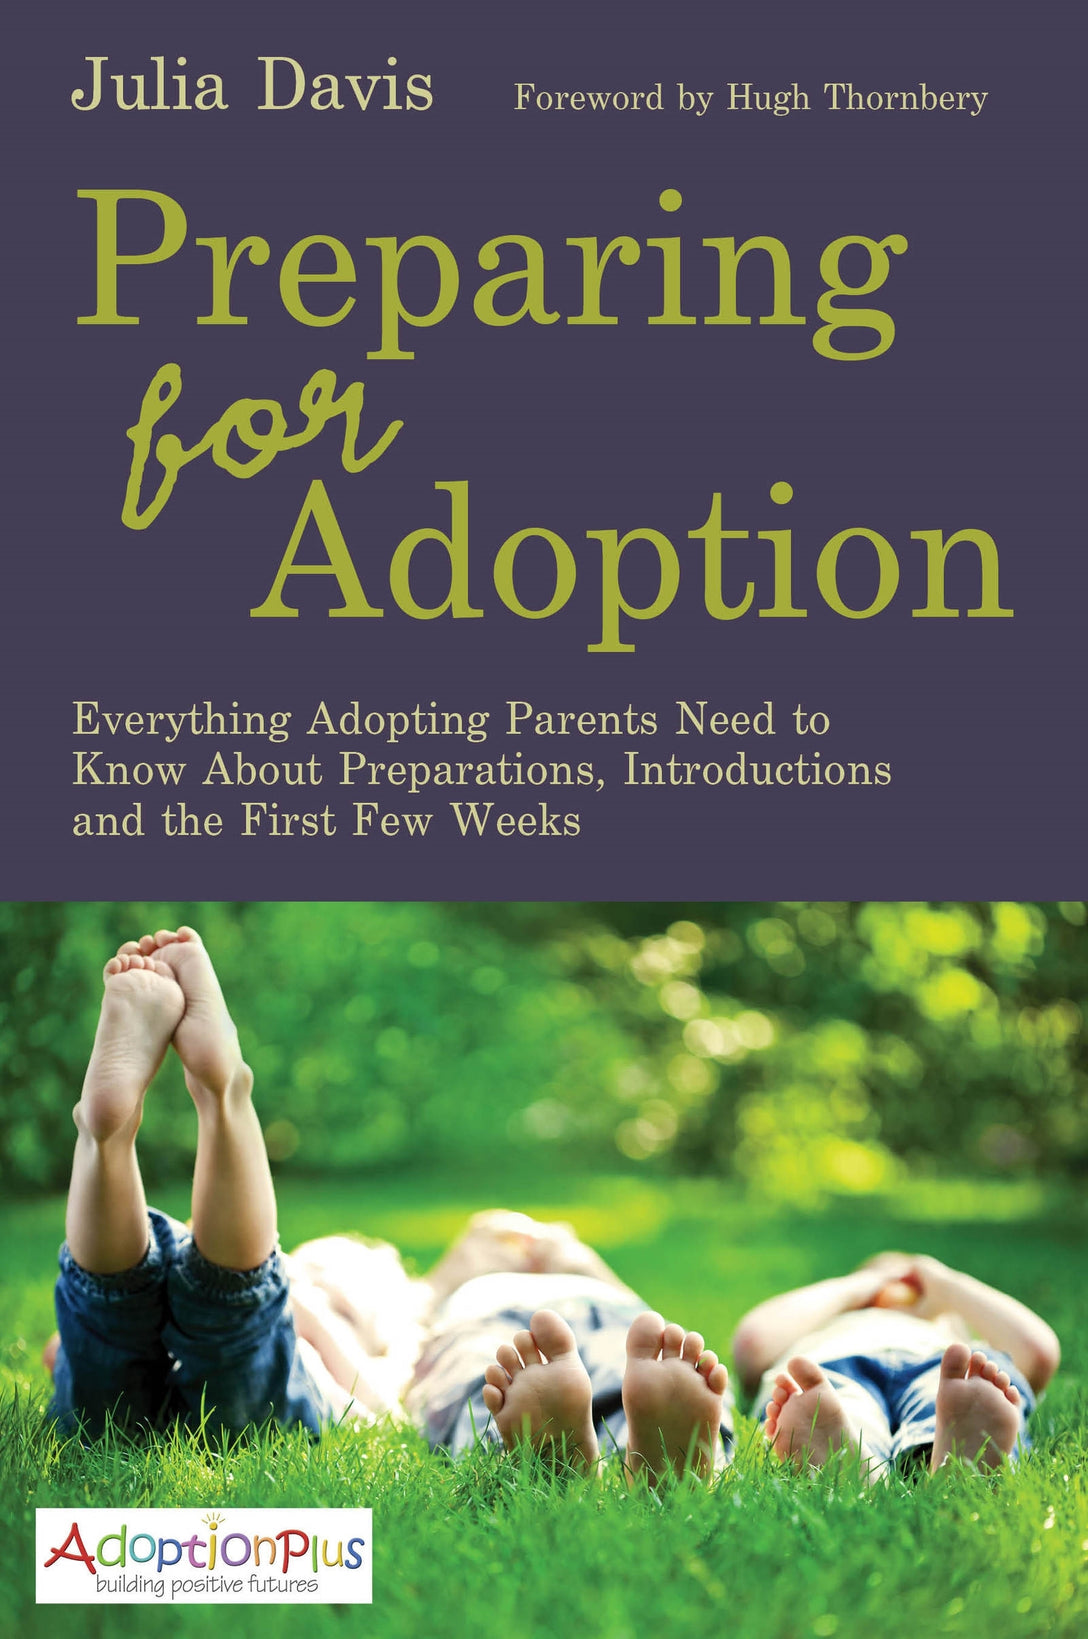 Preparing for Adoption by Hugh Thornbery, Julia Davis